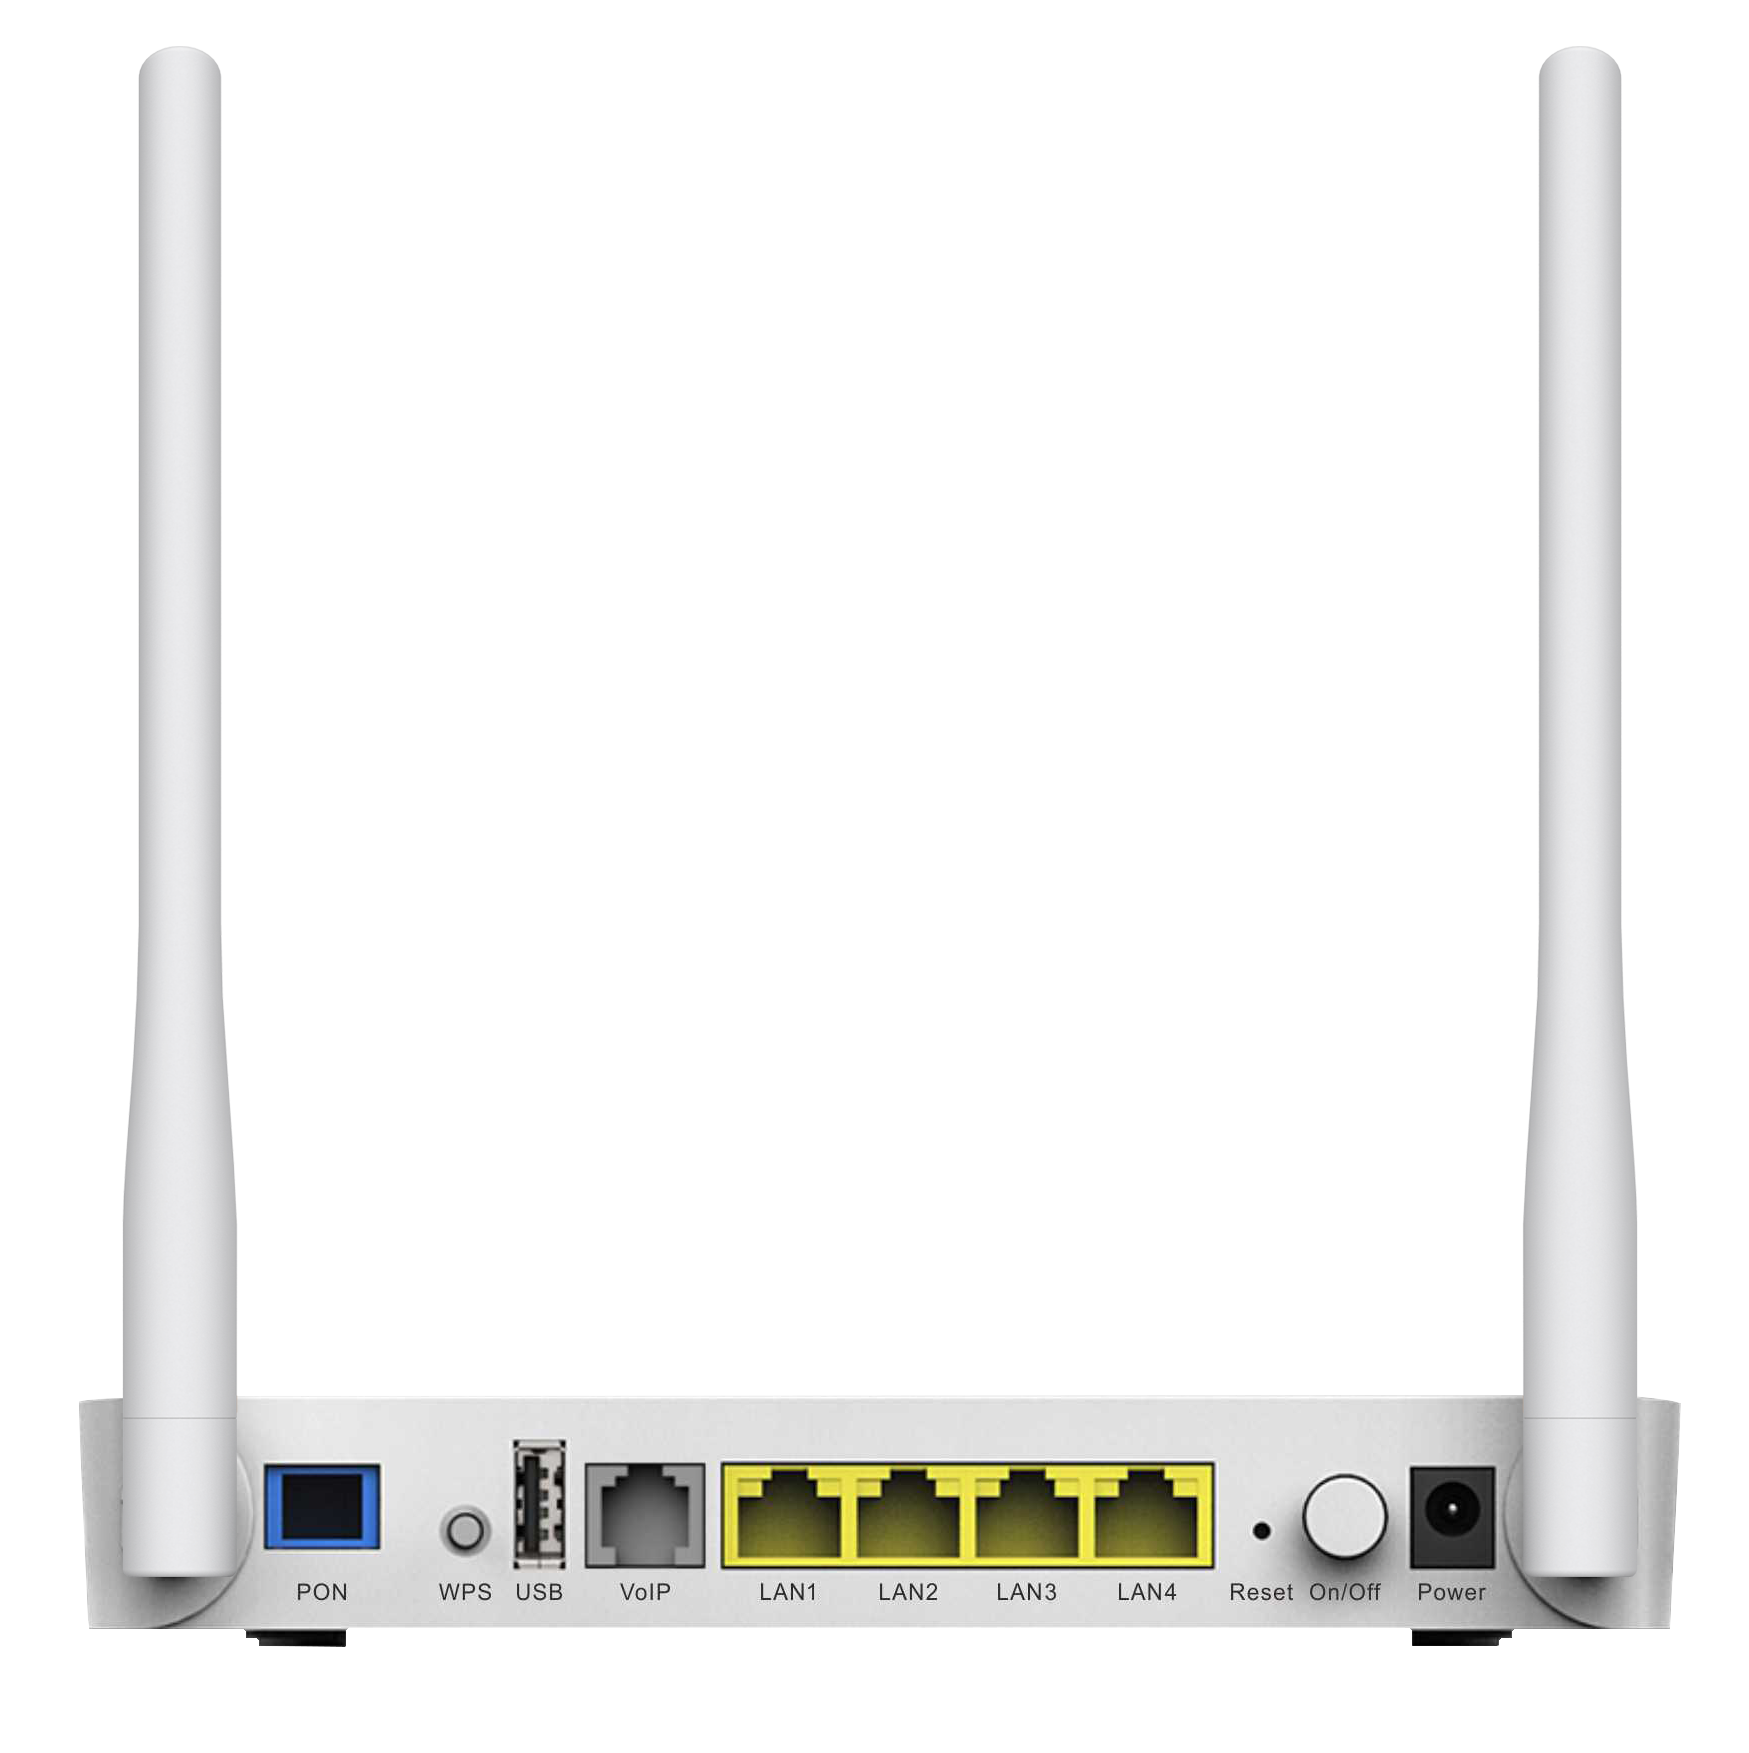 Optical Network Unit